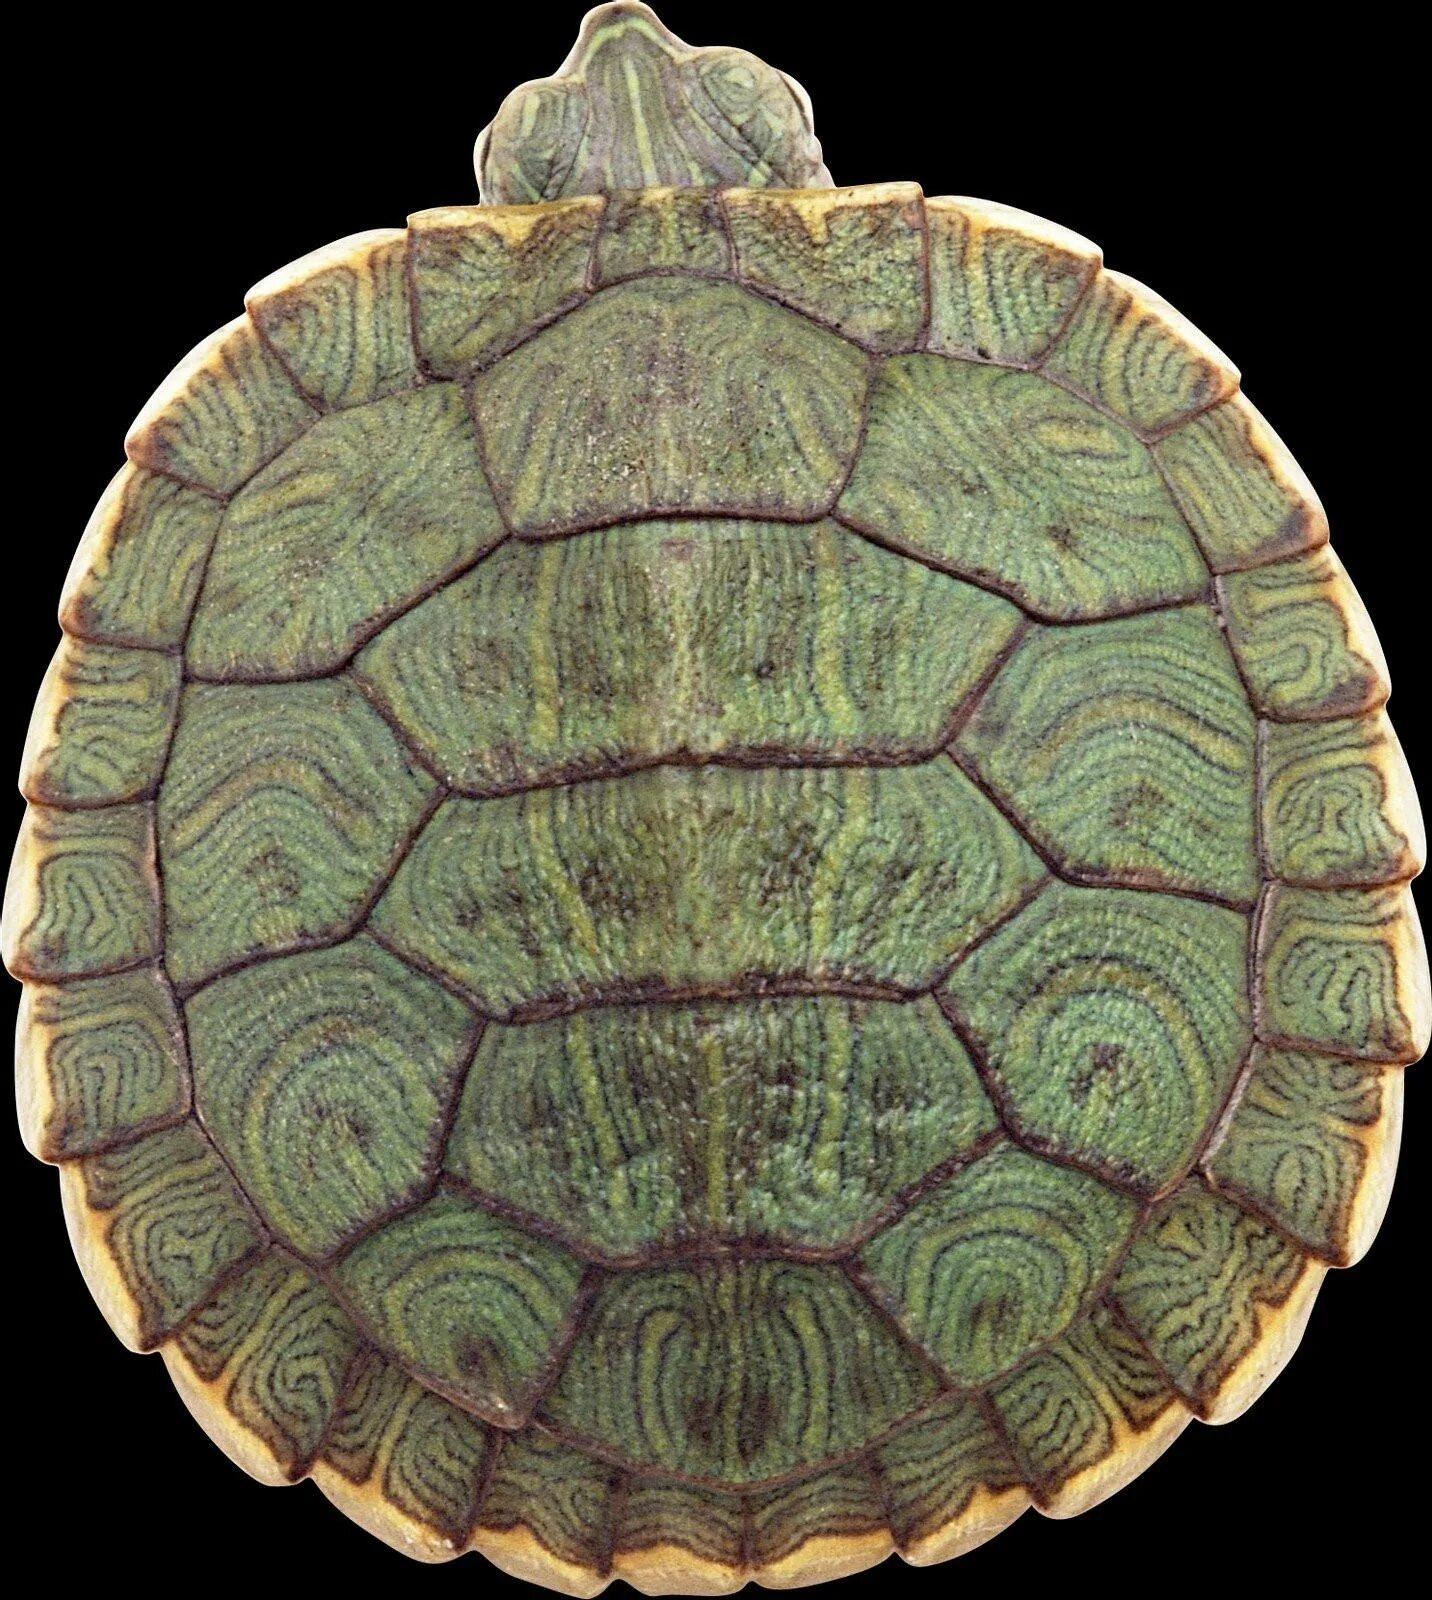 Черепаха форма. Карапакс красноухой черепахи. Панцирь красноухой черепахи. Панцирь черепахи карапакс. Карапакс у черепахи что это.